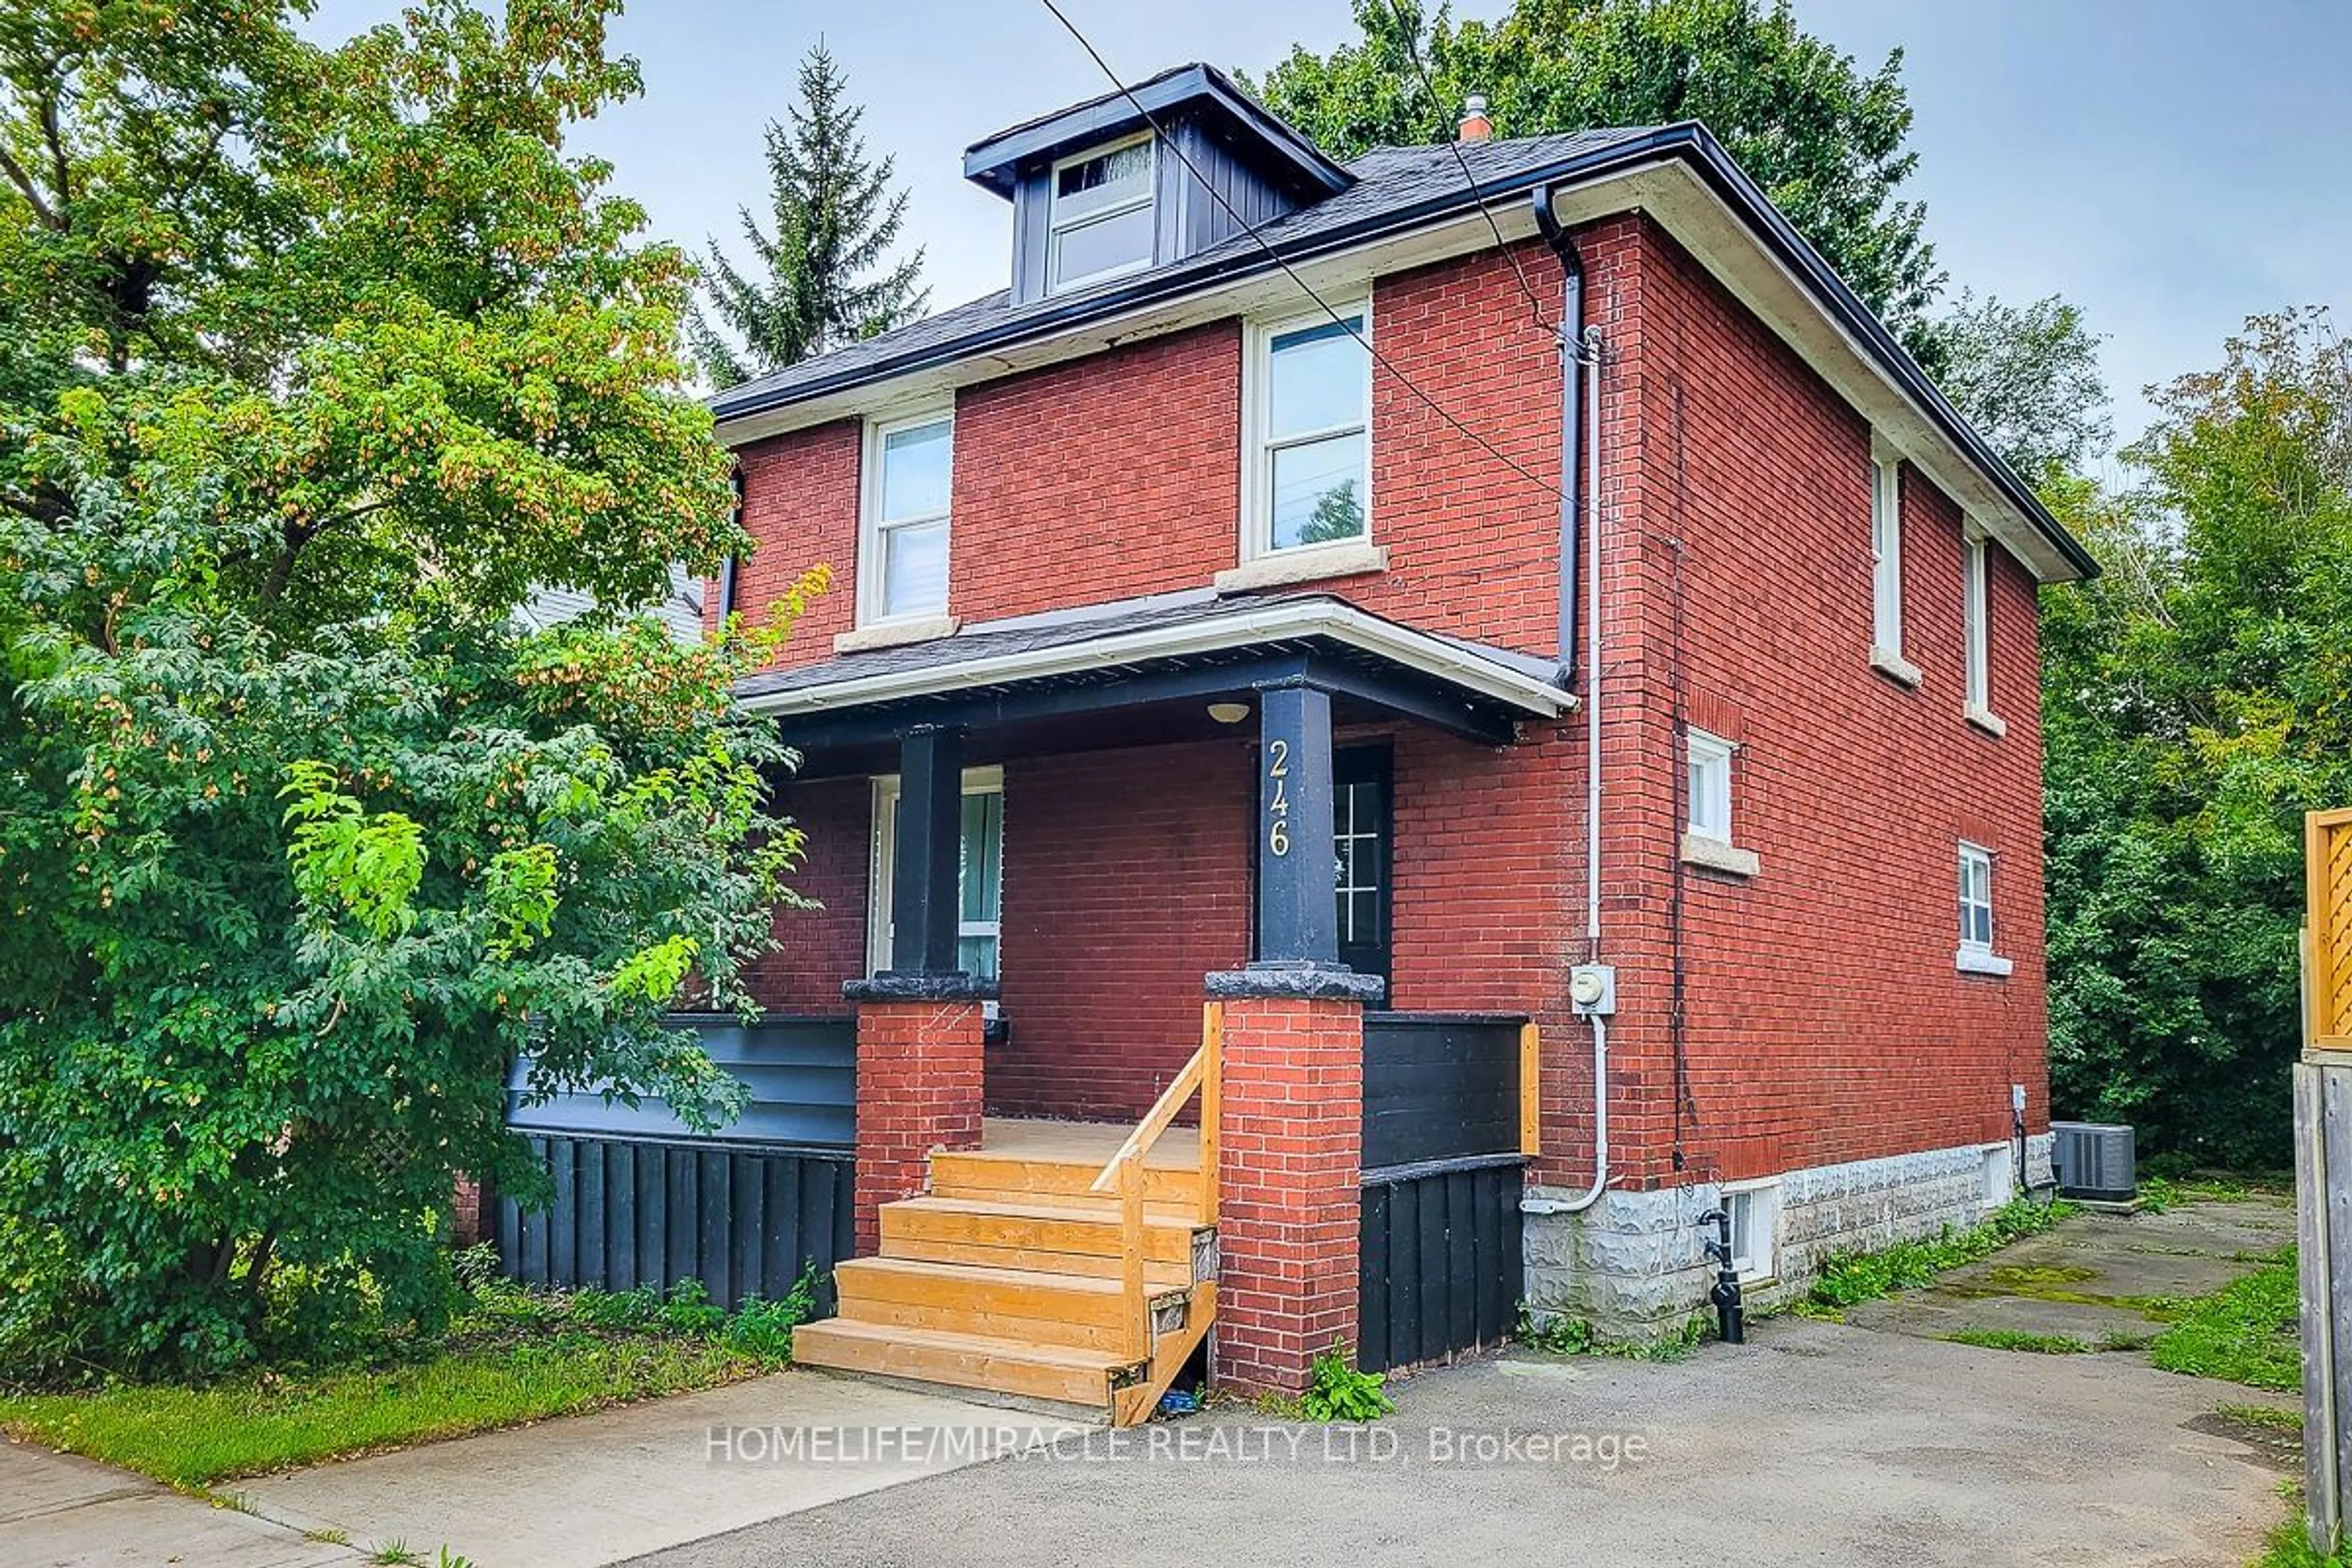 Home with brick exterior material for 246 Davis St, Port Colborne Ontario L3K 1Z3